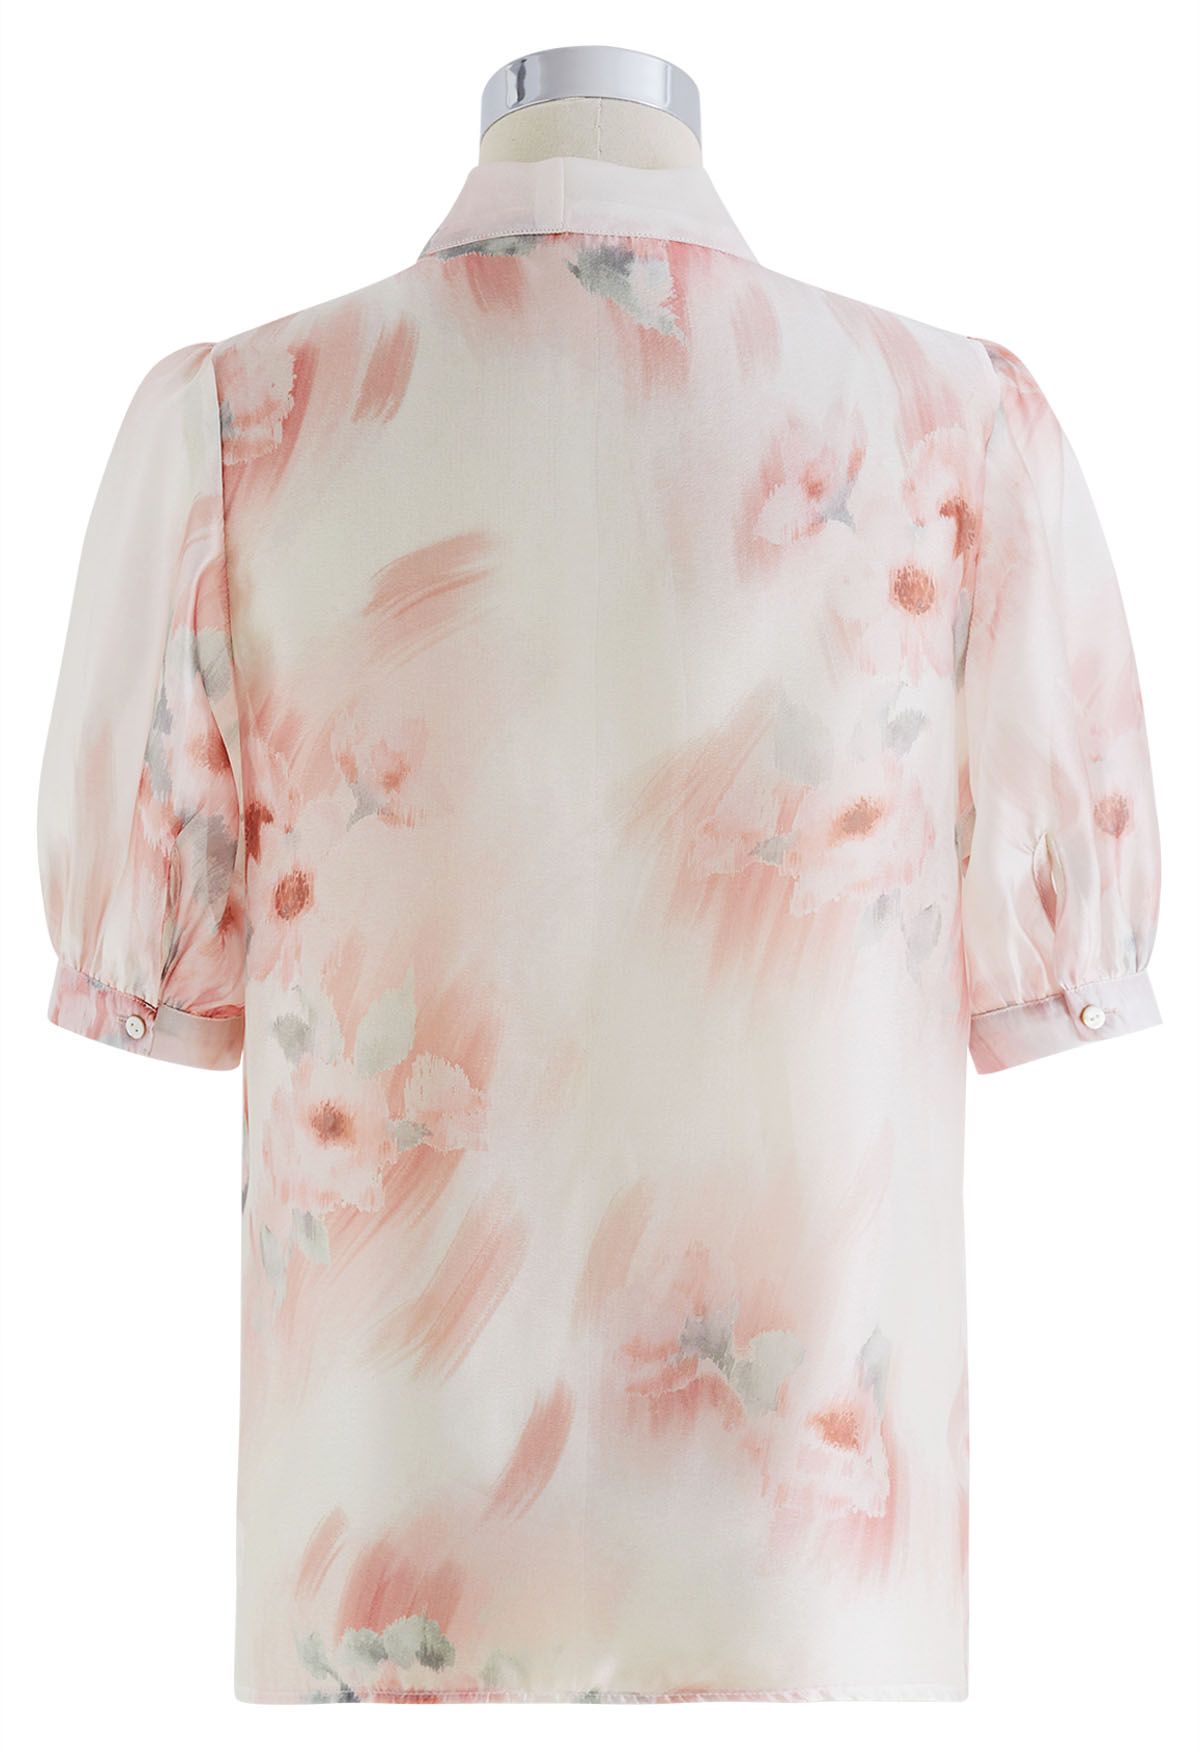 Watercolor Floral Bowknot Sheer Shirt in Coral